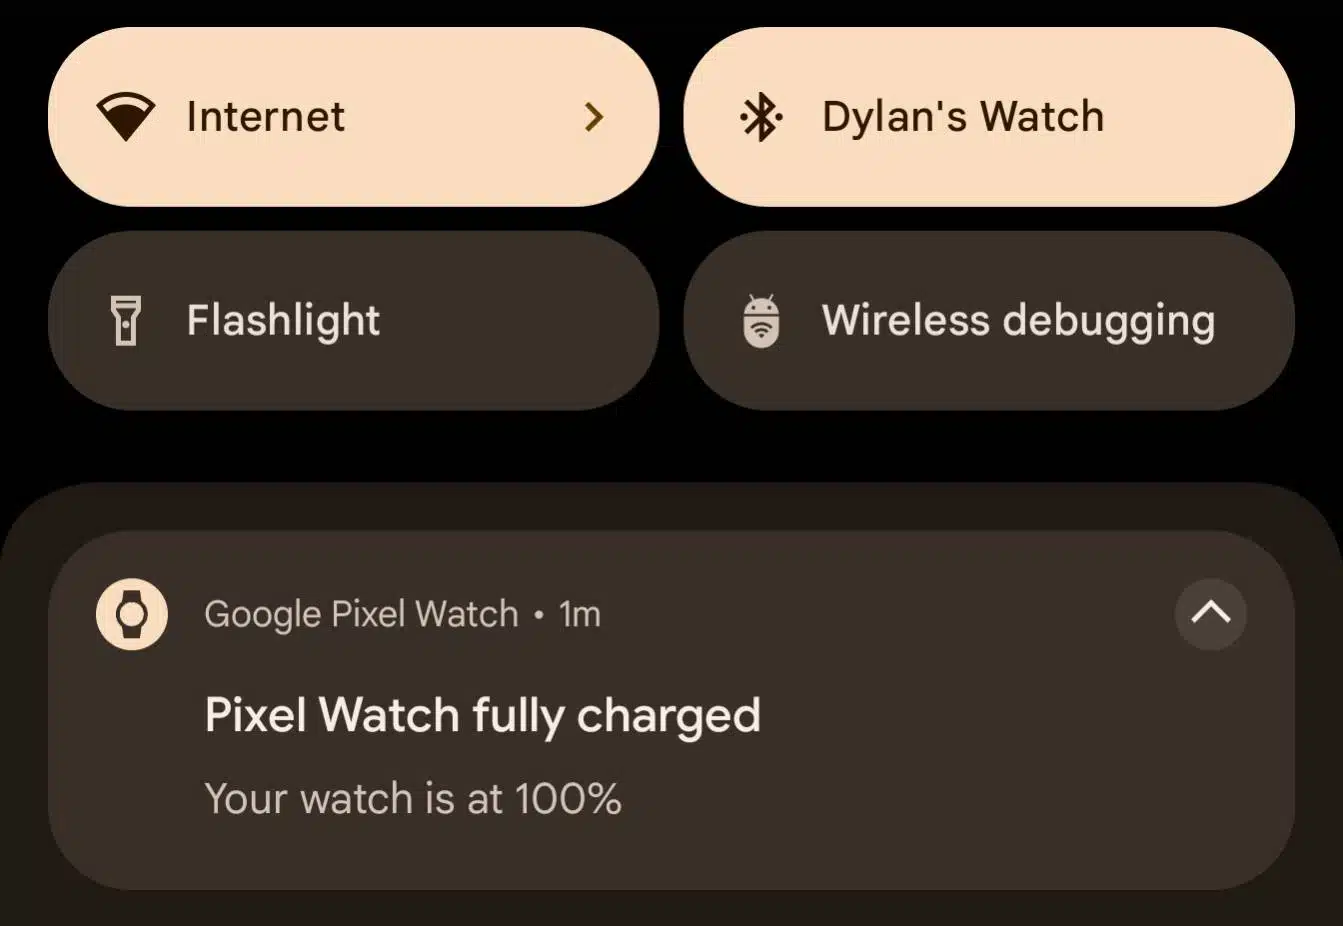 Pixel Watch App to Notify Users When Watch Battery is Full